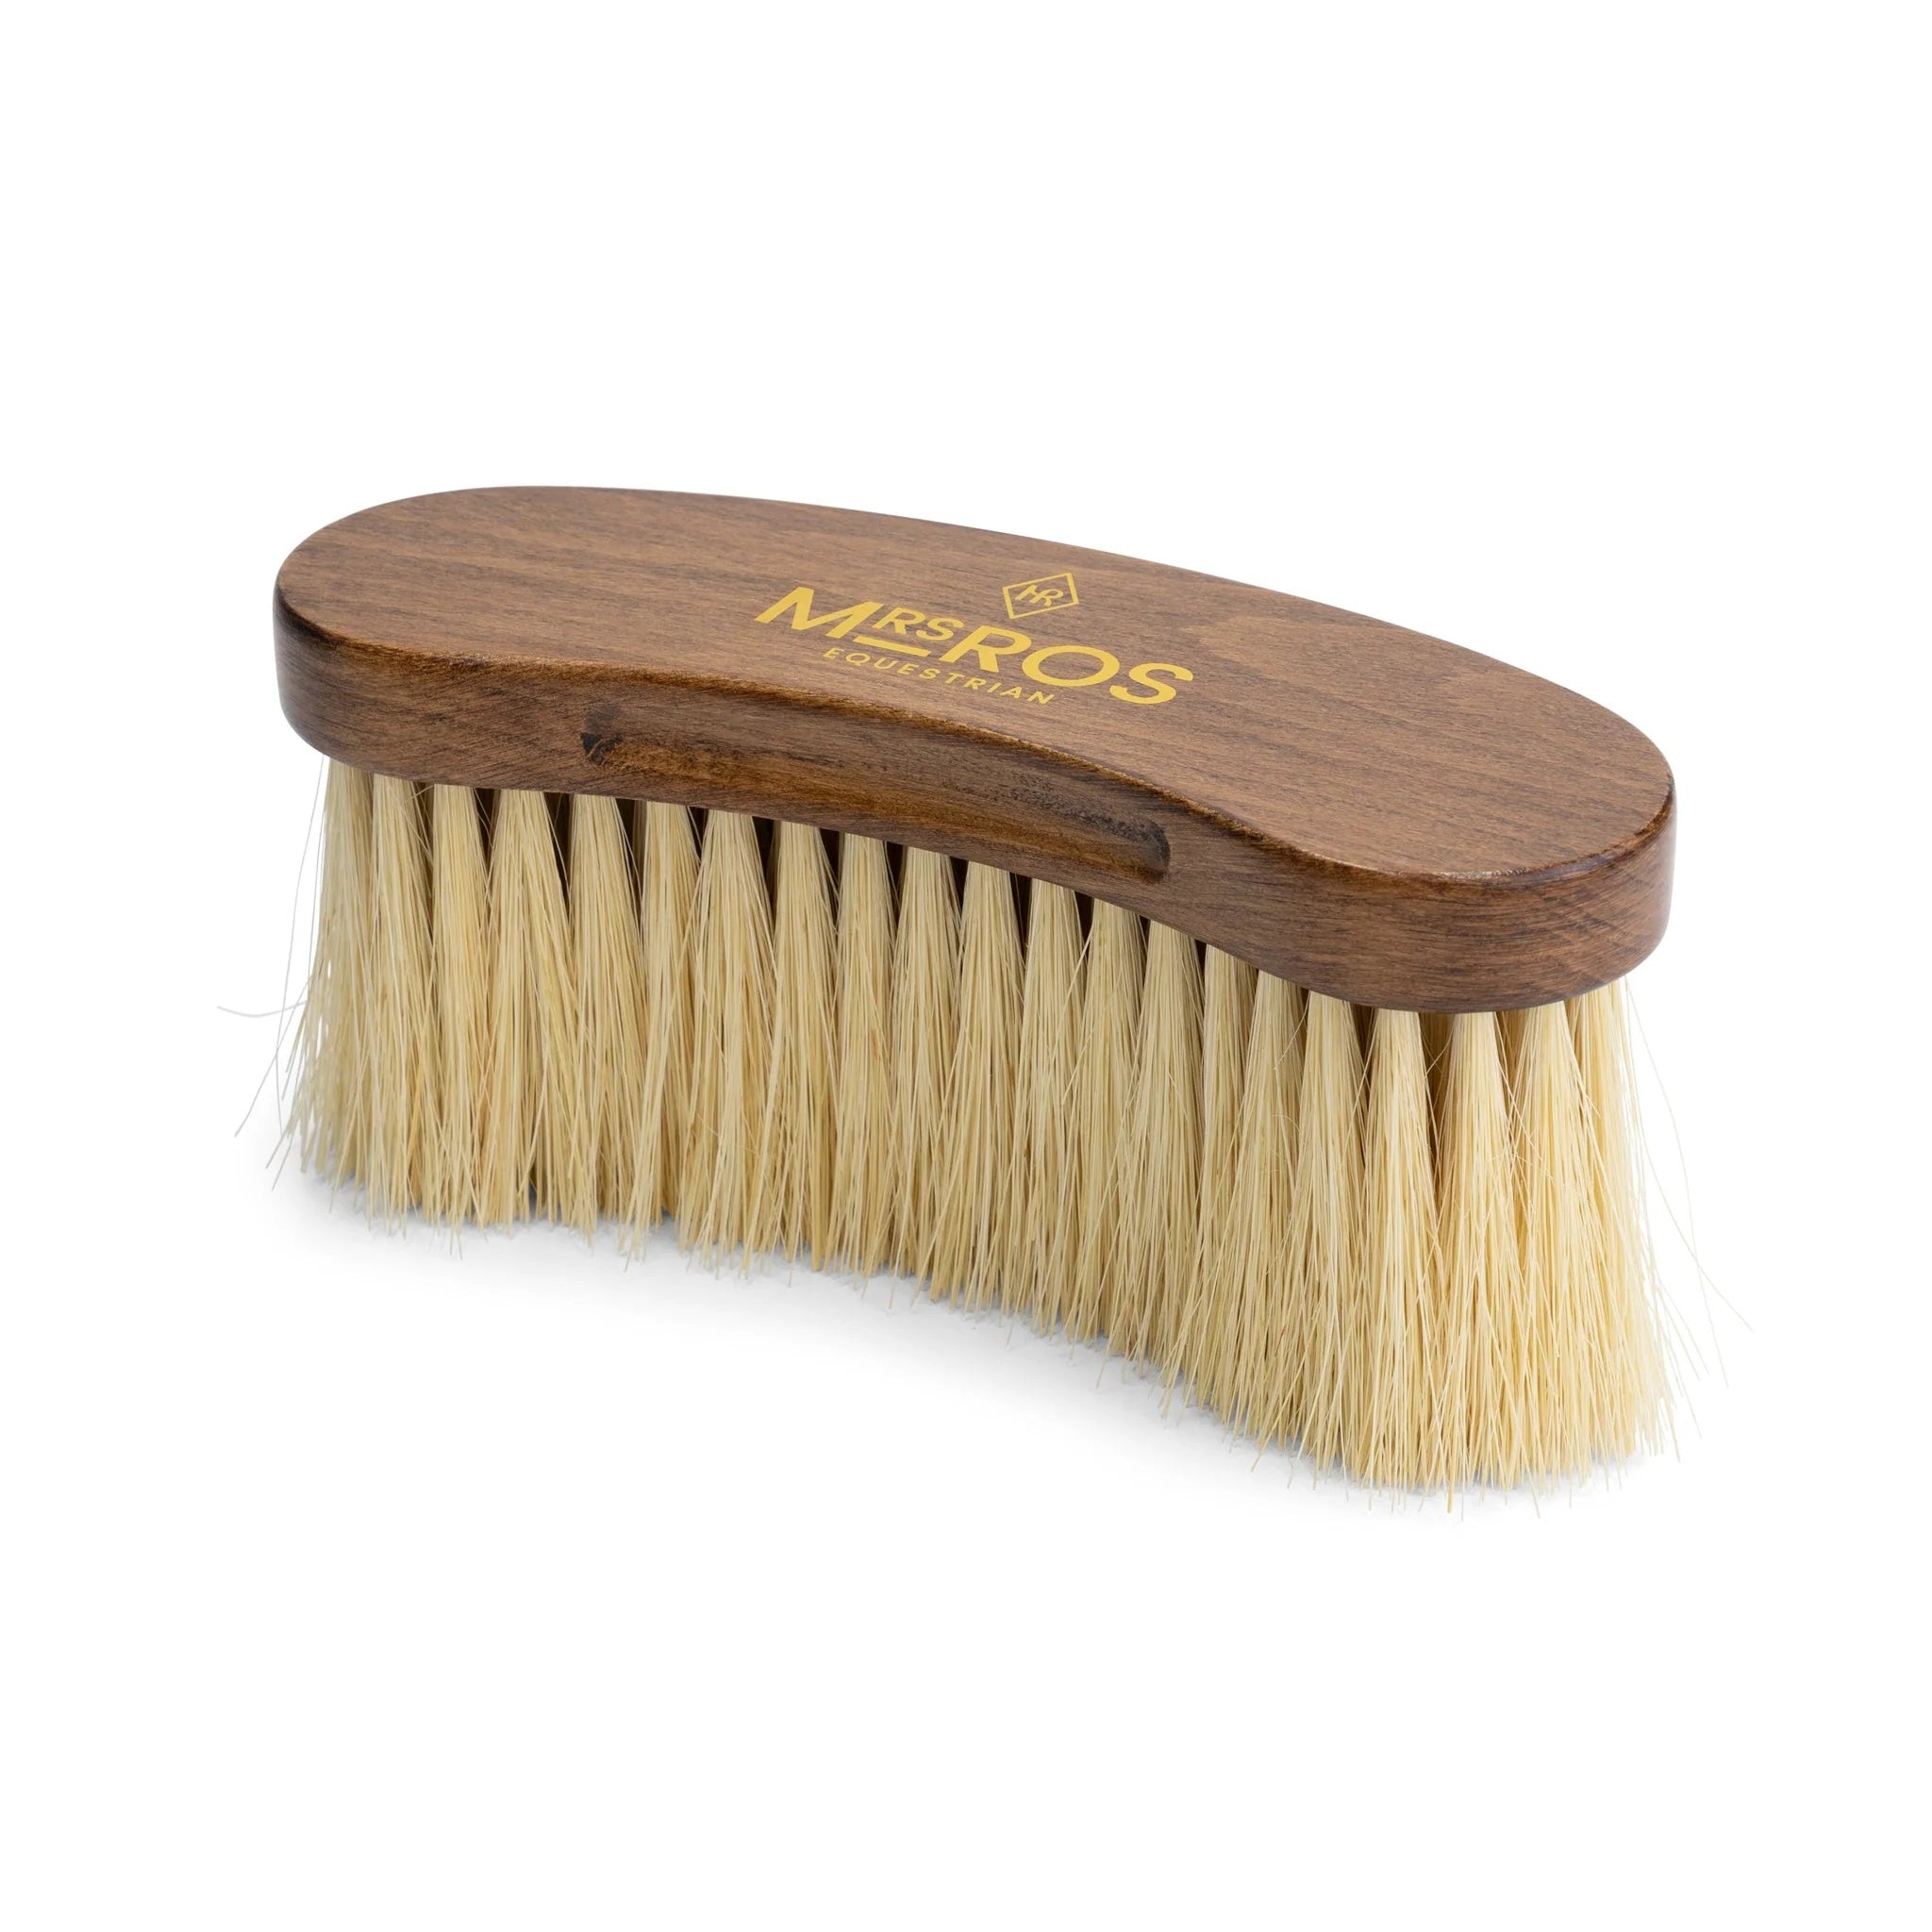 Grooming Brush - Deluxe